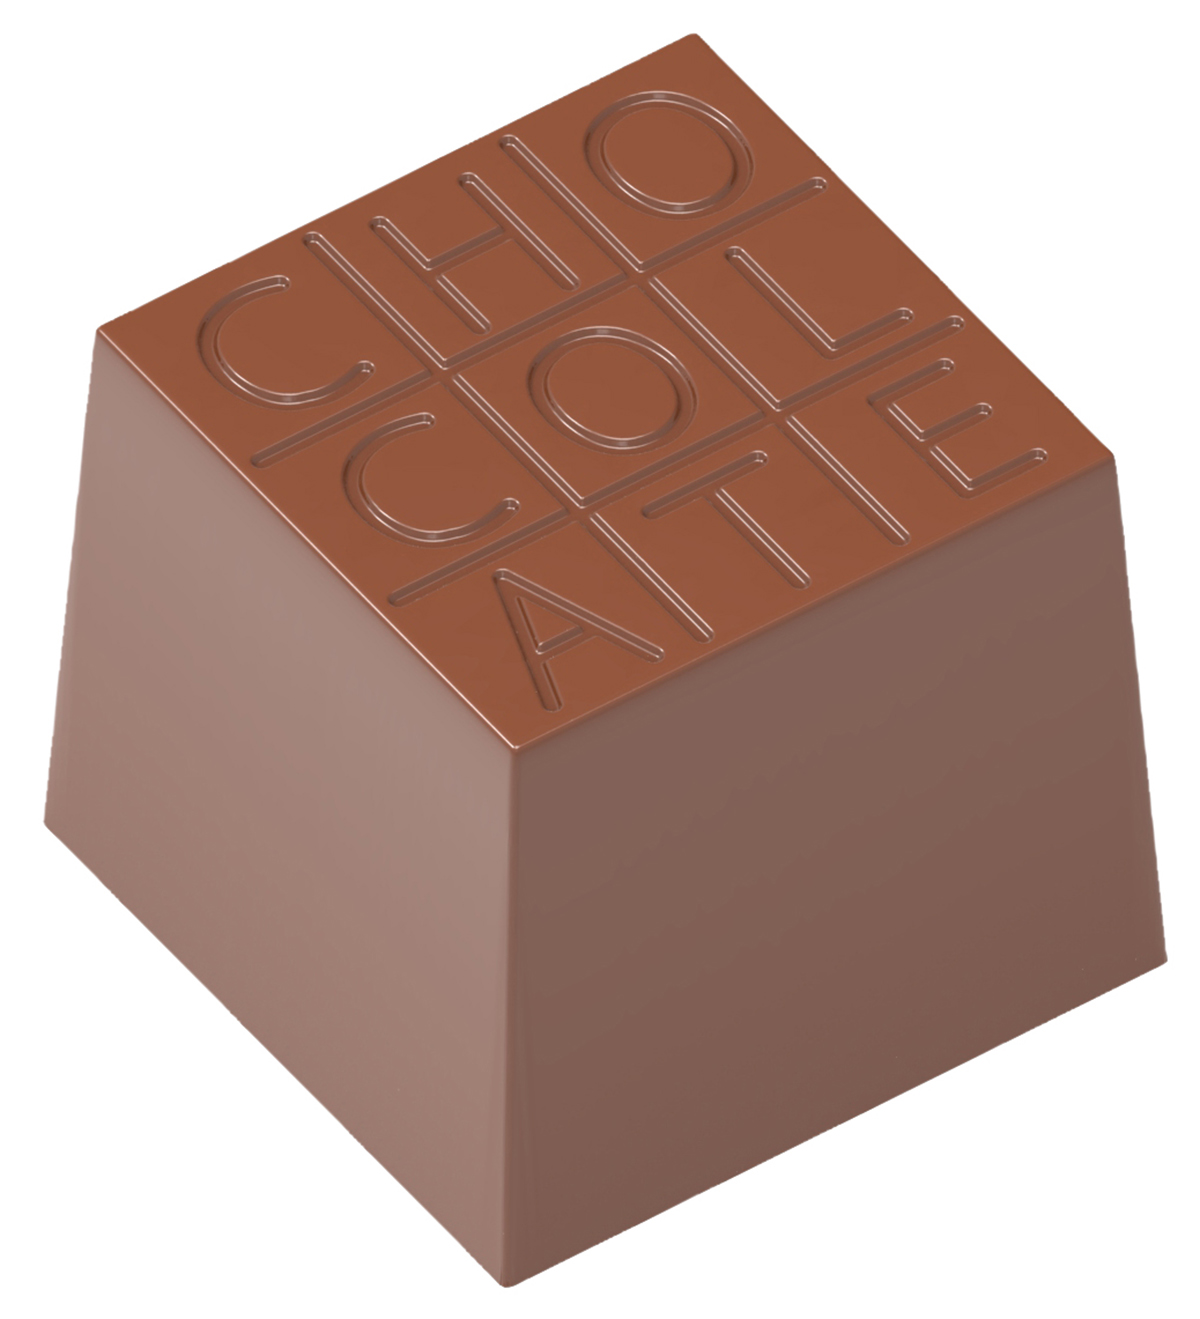 Se Professionel chokoladeform i polycarbonat - Cube "Chocolate" CW1729 hos BageTid.dk